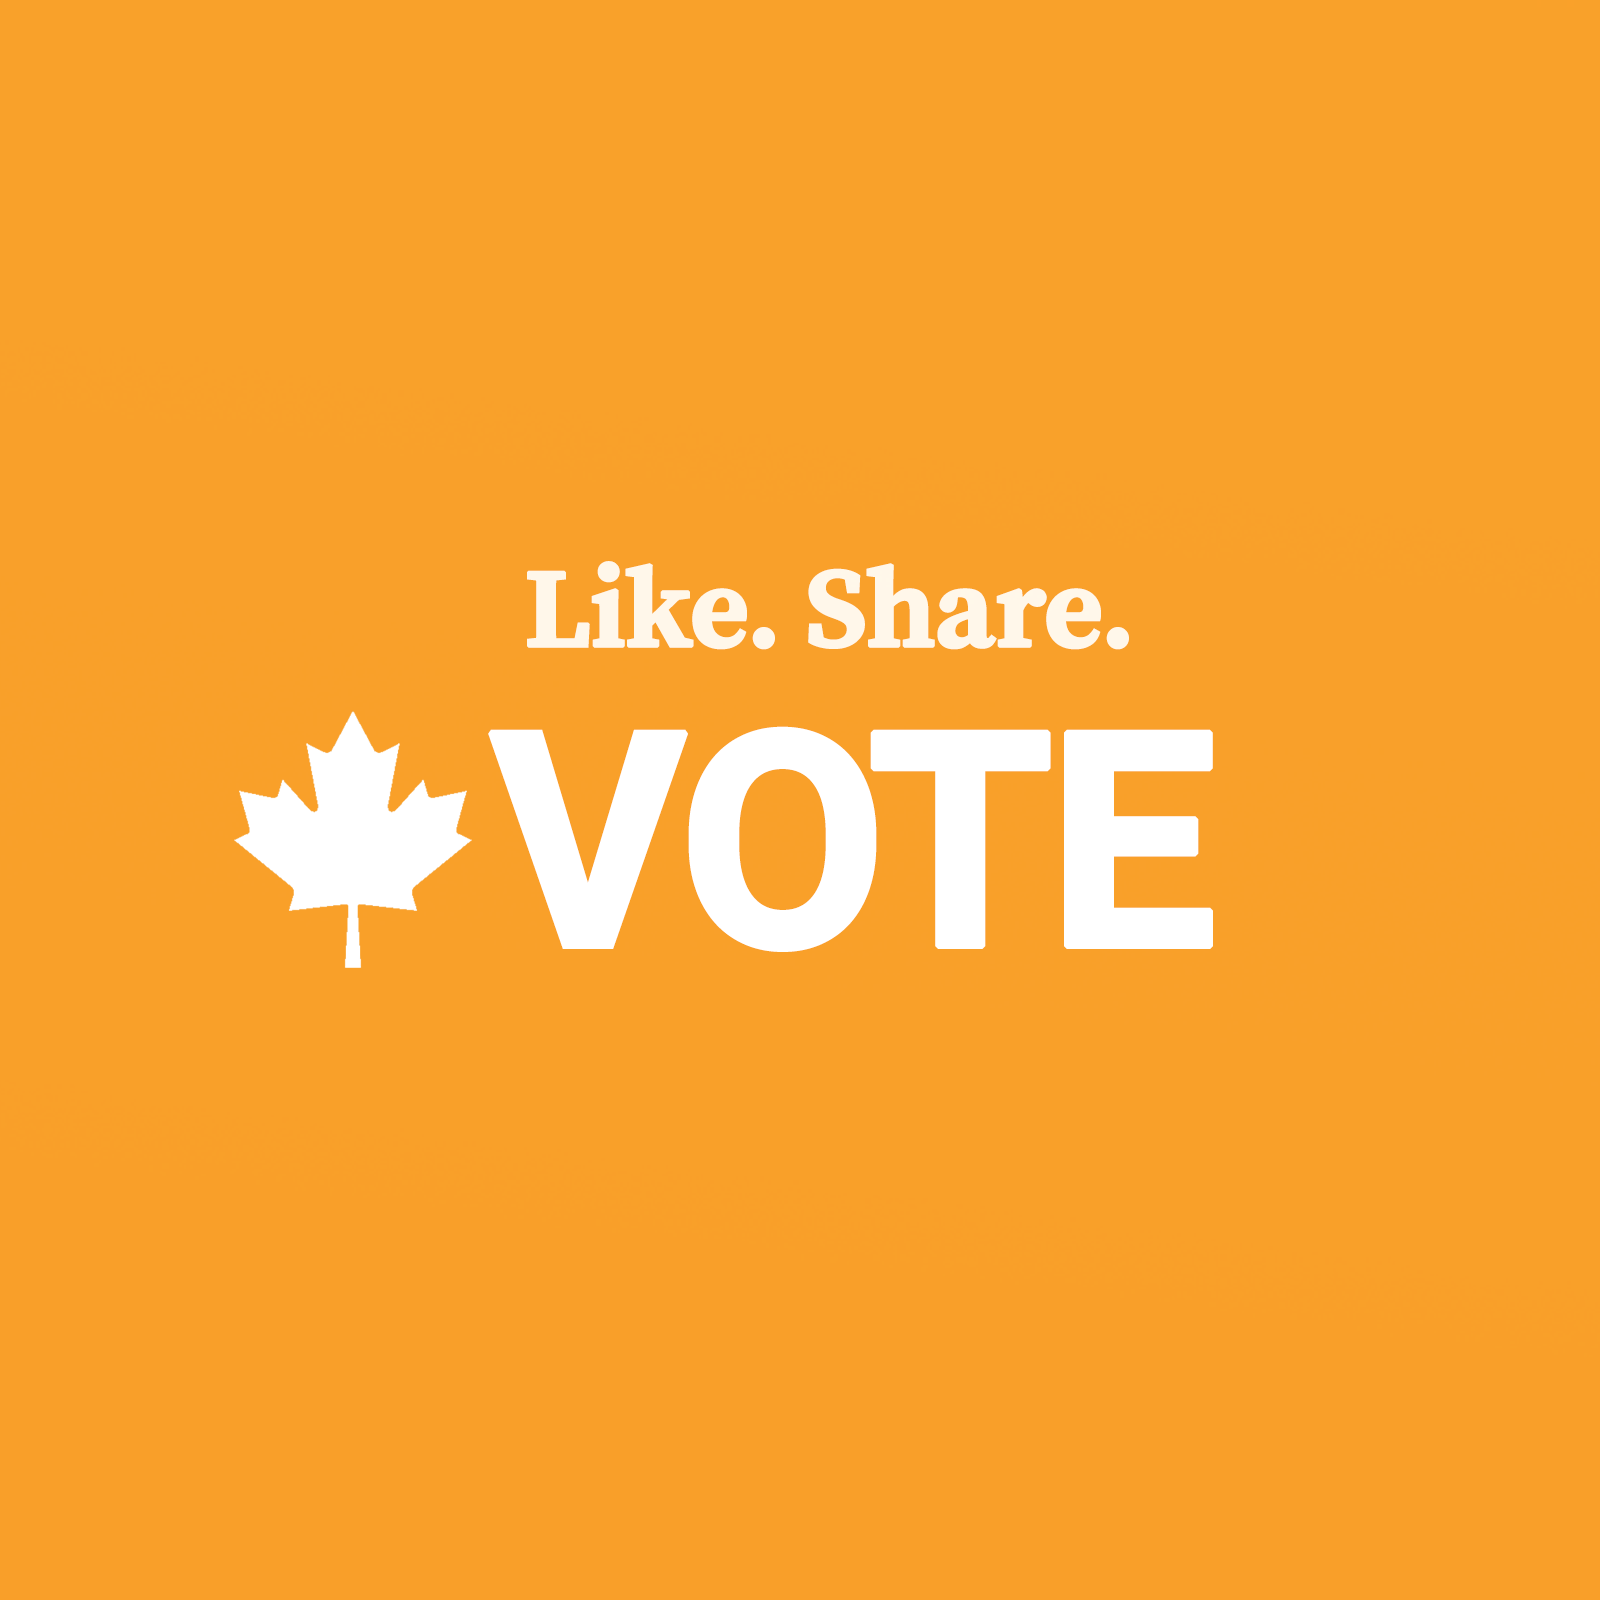 Like Share Vote election image